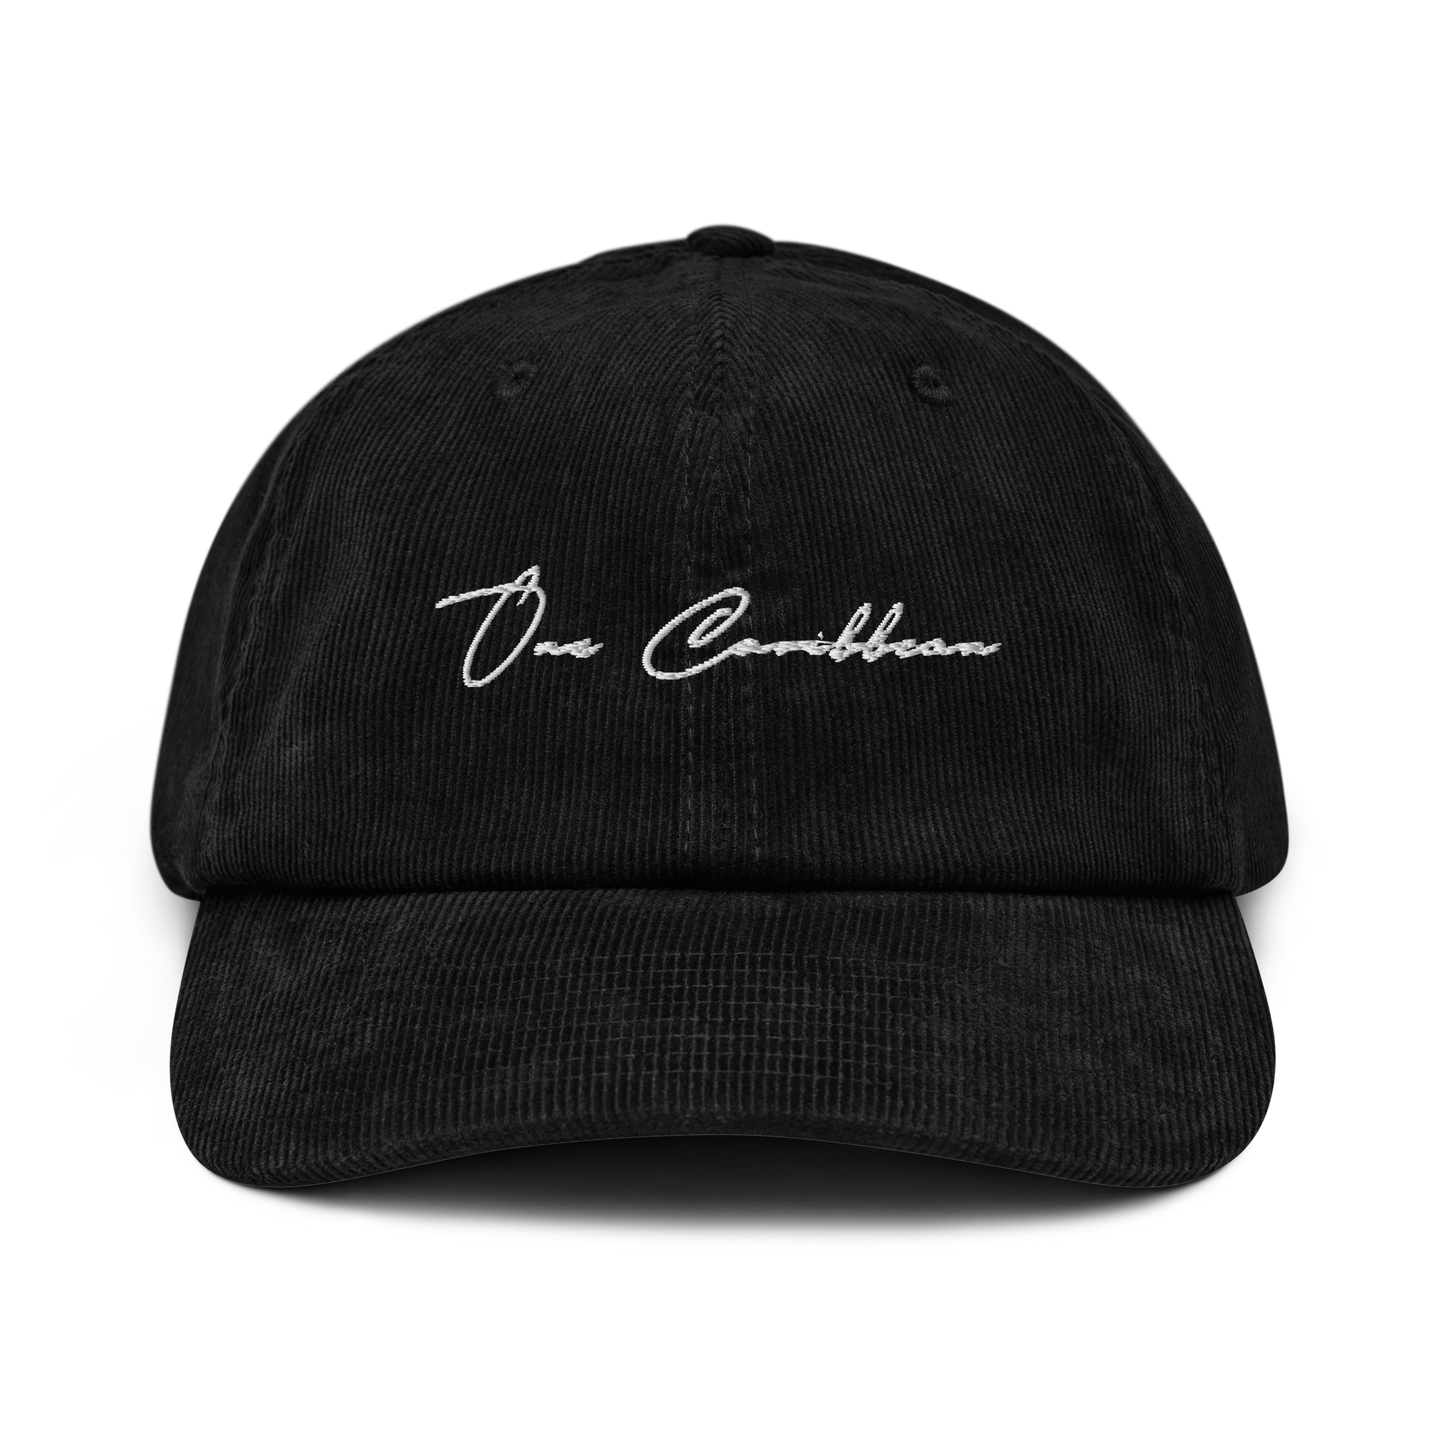 One Caribbean Corduroy Hat